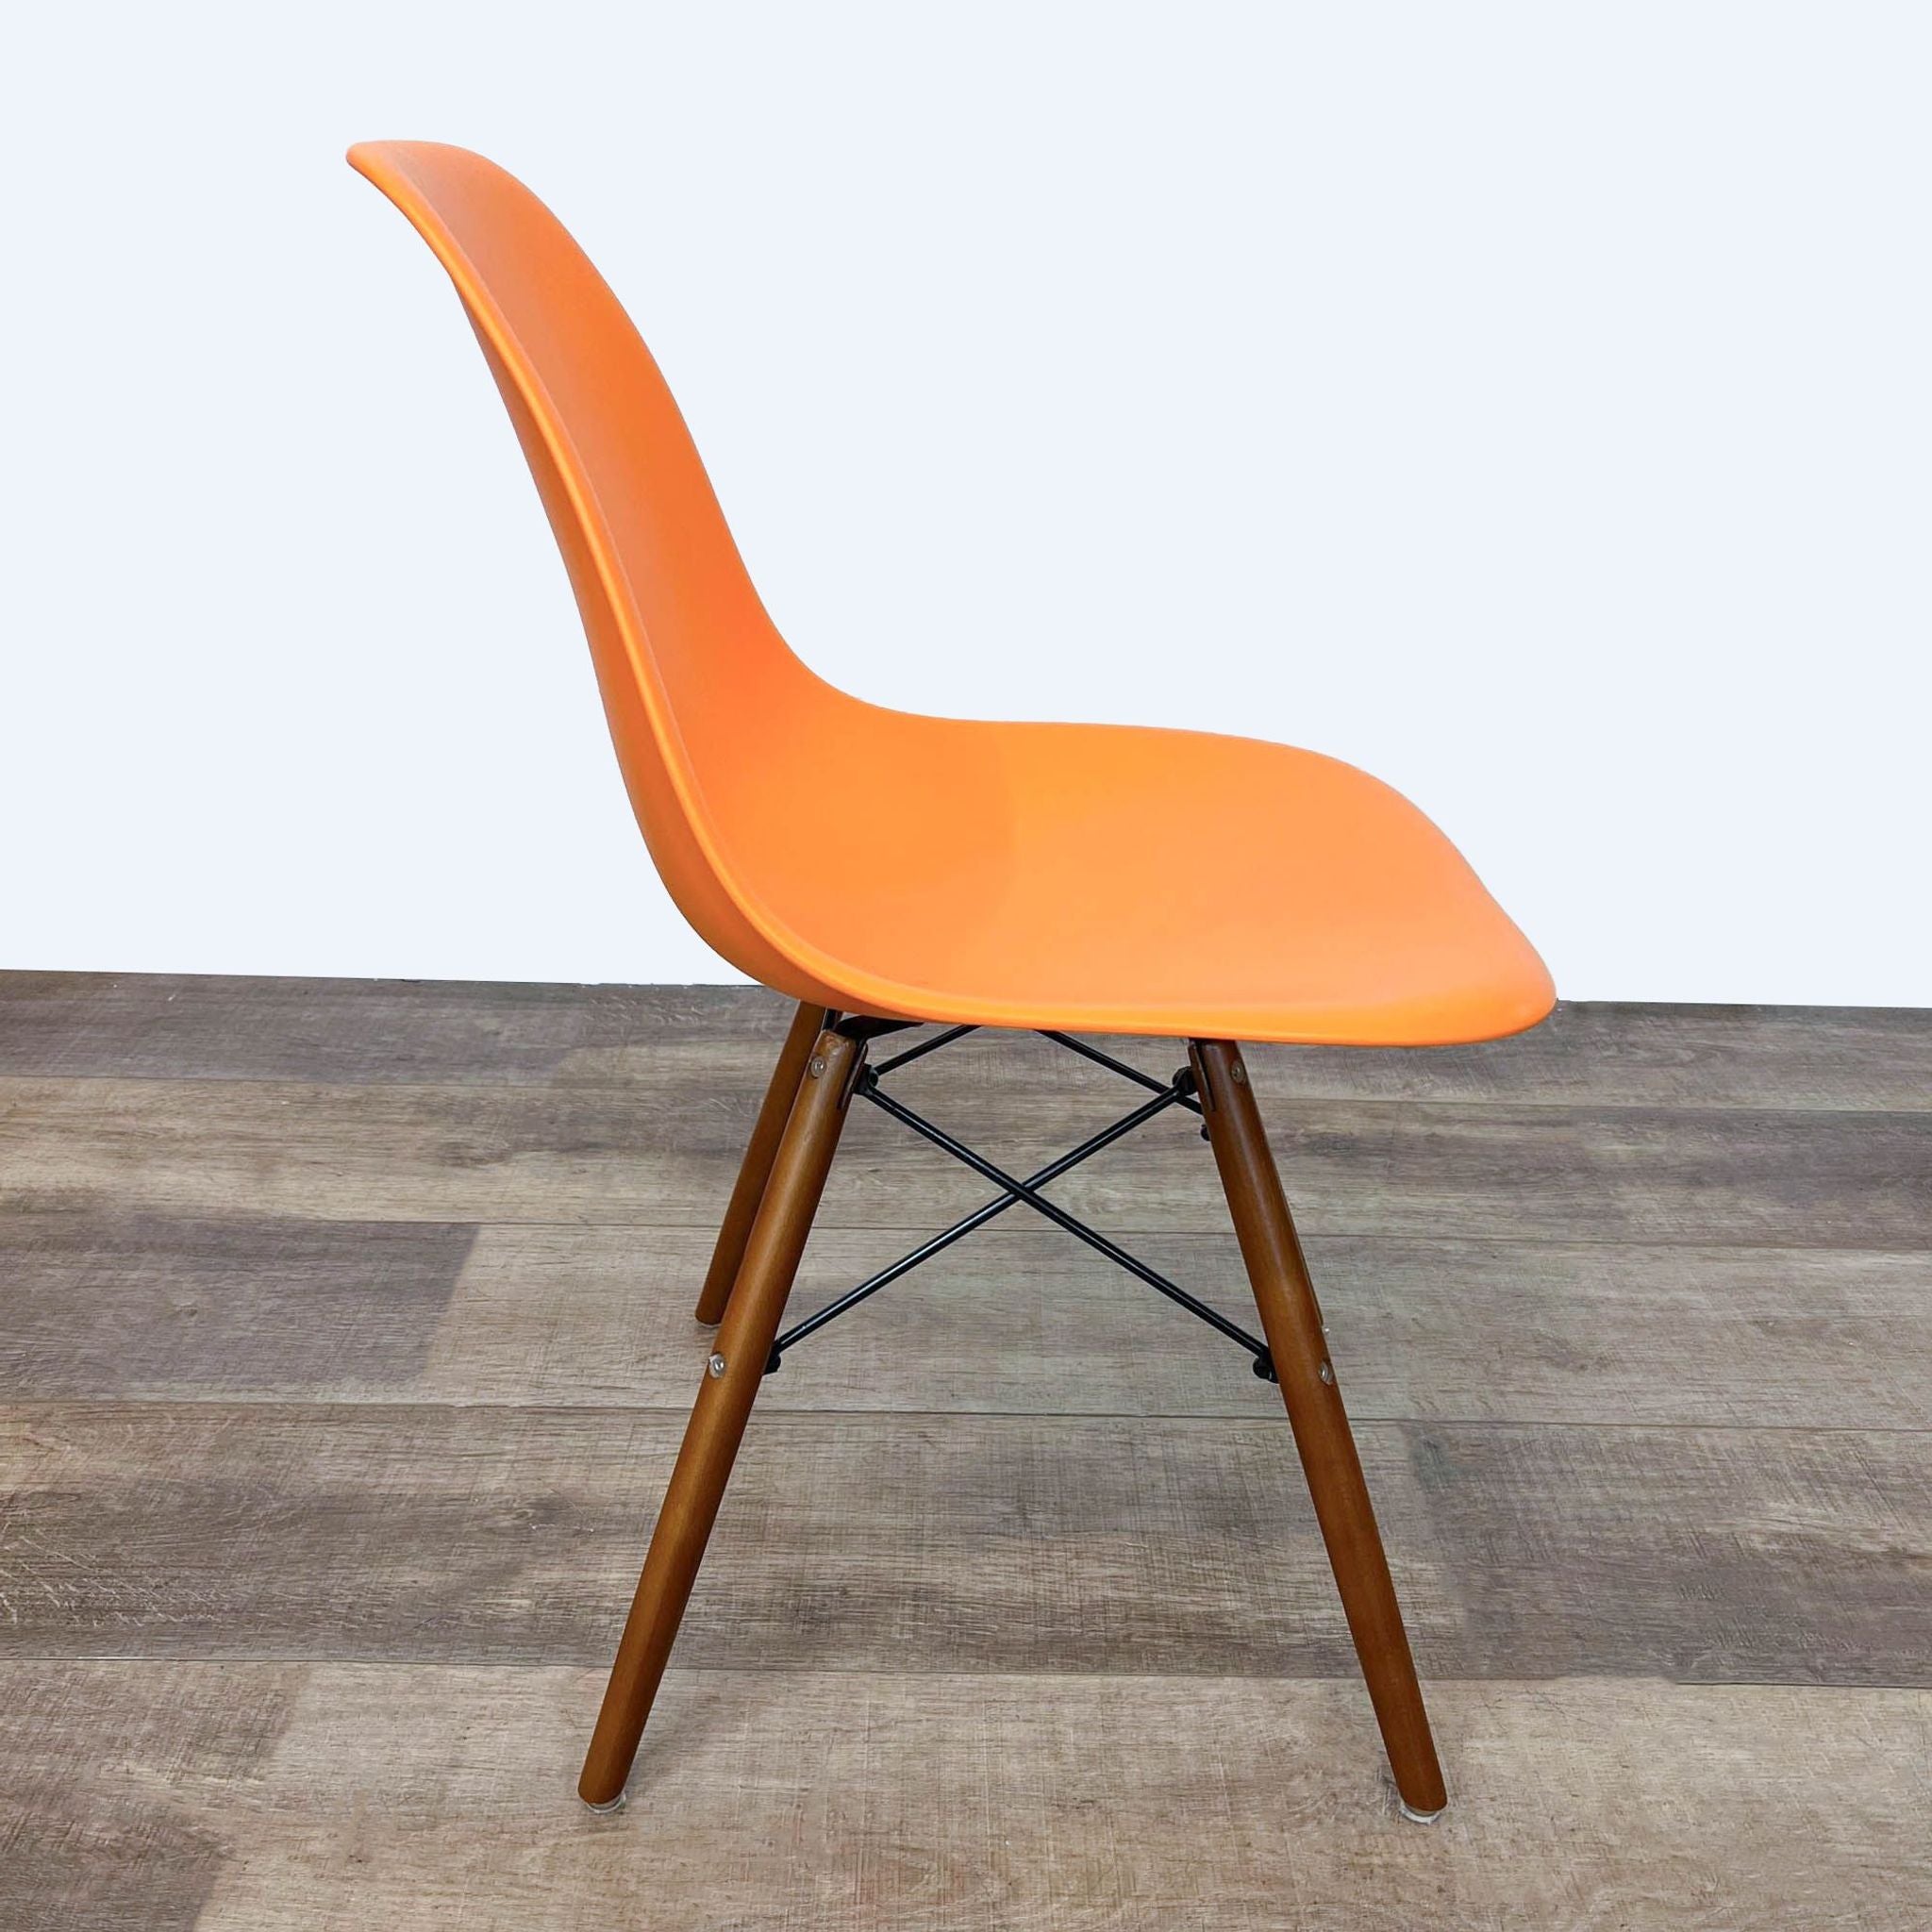 Modern Reperch orange polypropylene chair with a distinctive Eifel base, positioned on wooden flooring.